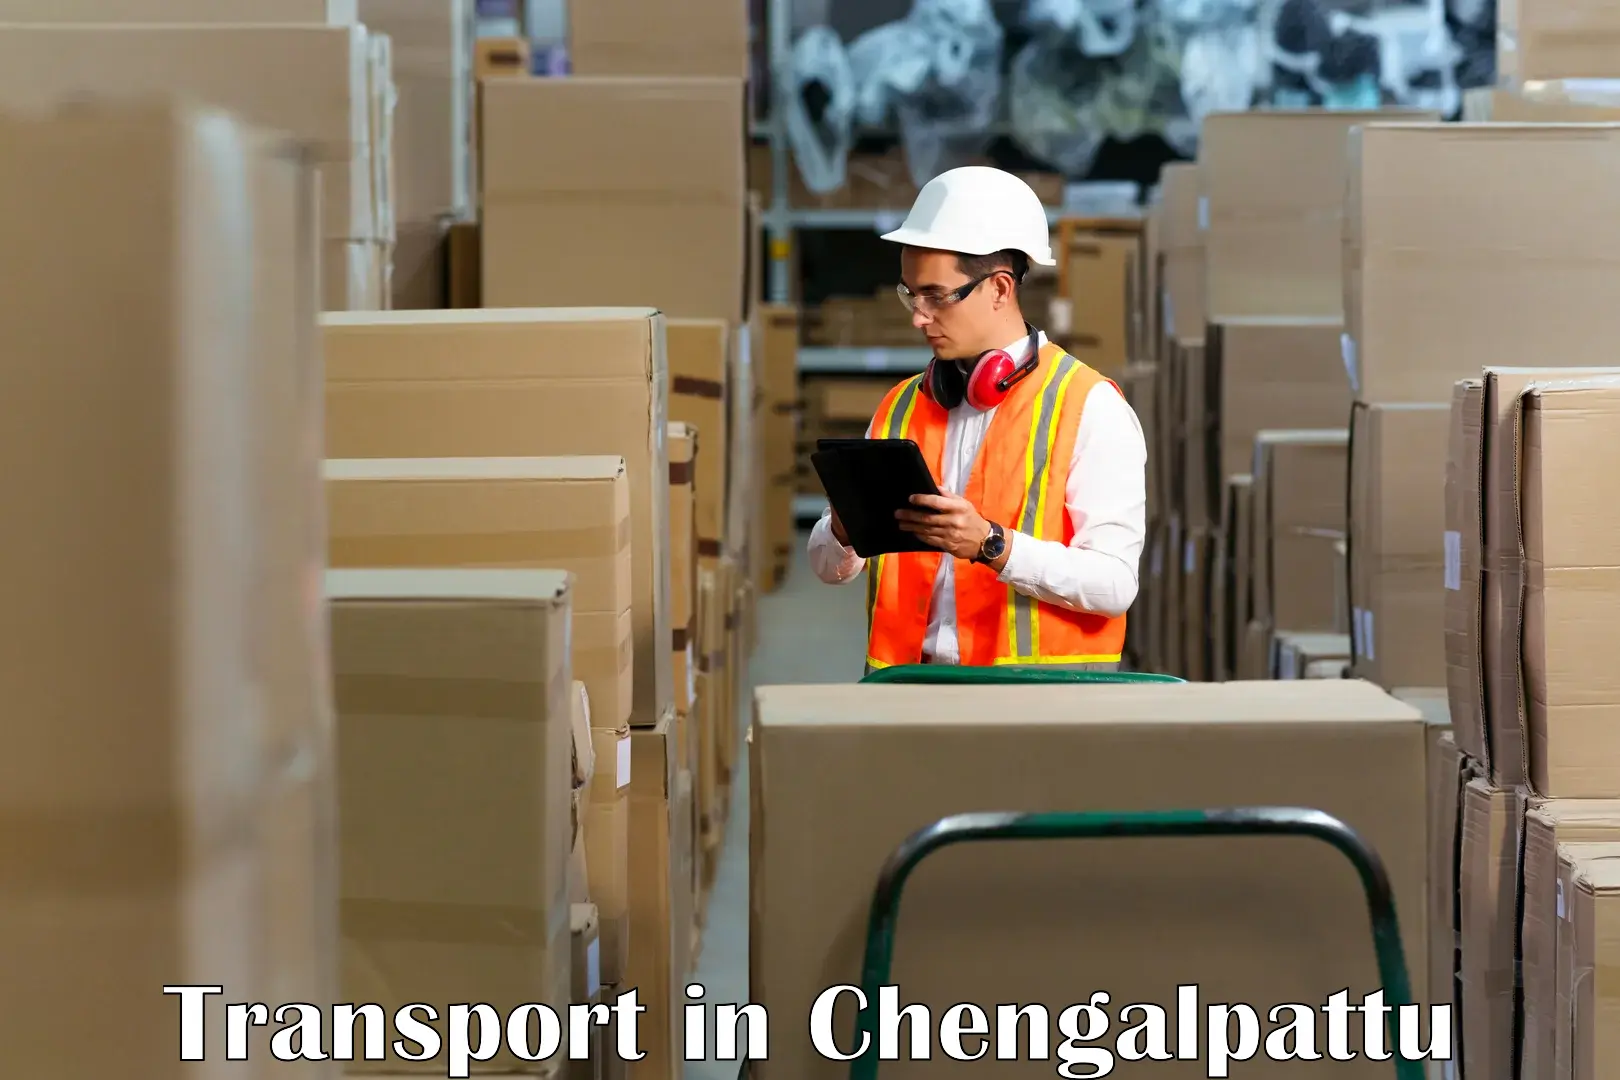 Road transport online services in Chengalpattu